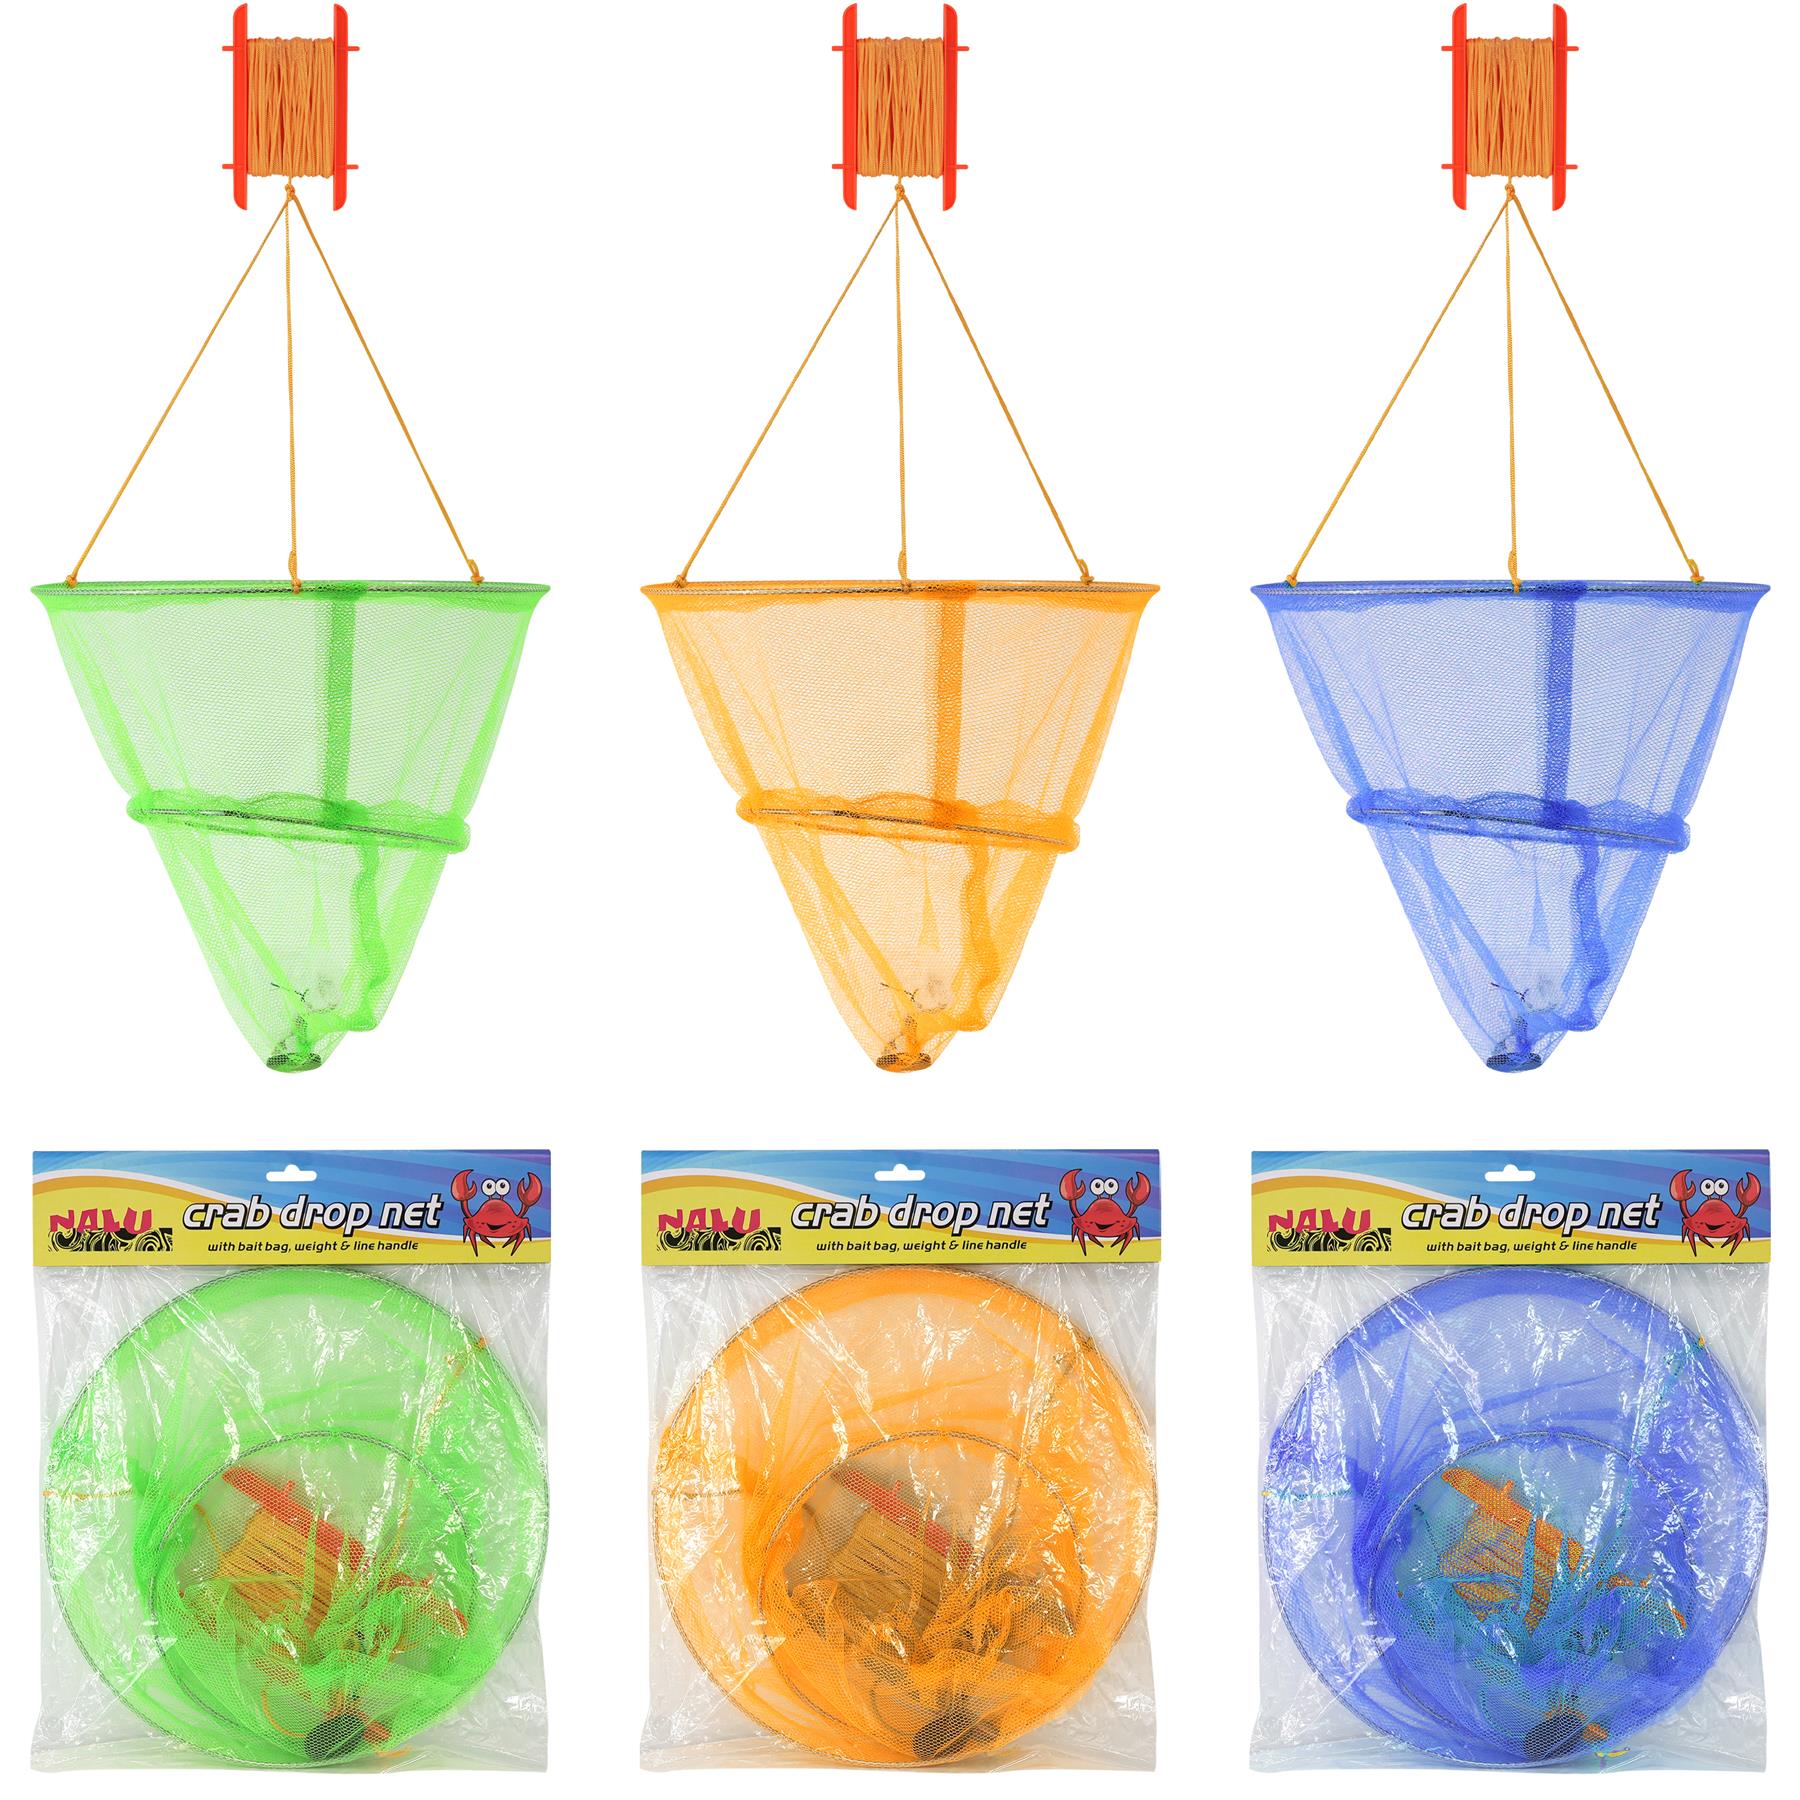 Kids Crab Drop Net w/ Net Bait Bag Holder Fishing by The Magic Toy